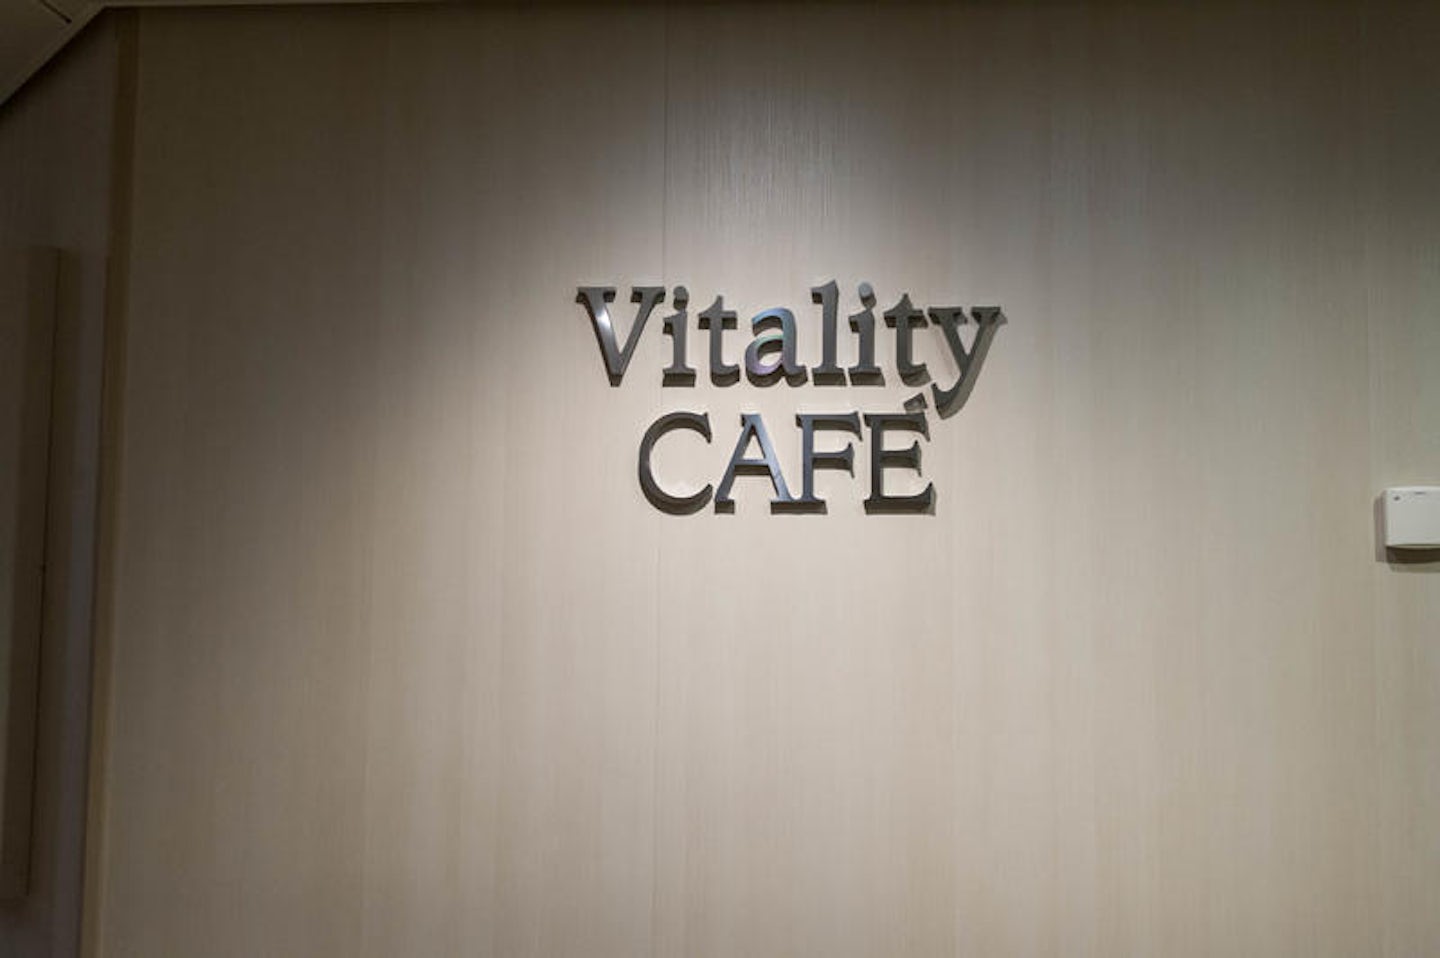 Vitality Cafe on Symphony of the Seas